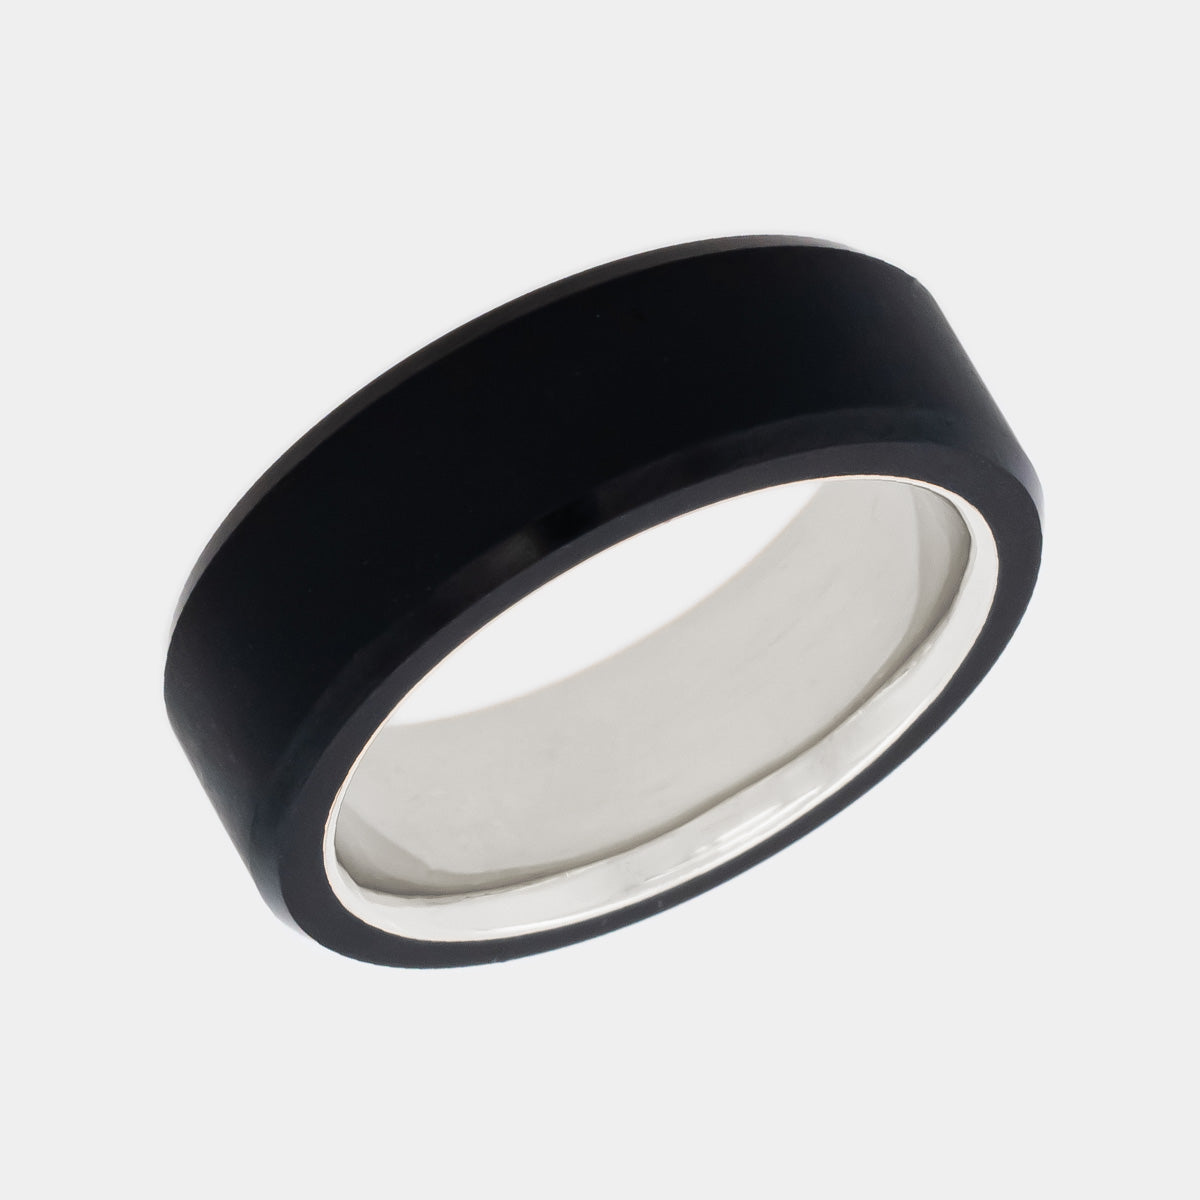 Elysium Black Diamond Ring: Ares Solid Black Diamond 8mm Ring & 14K White Gold Sleeve | Black Wedding Ring for Men | Men's Wedding Band | Black Diamond